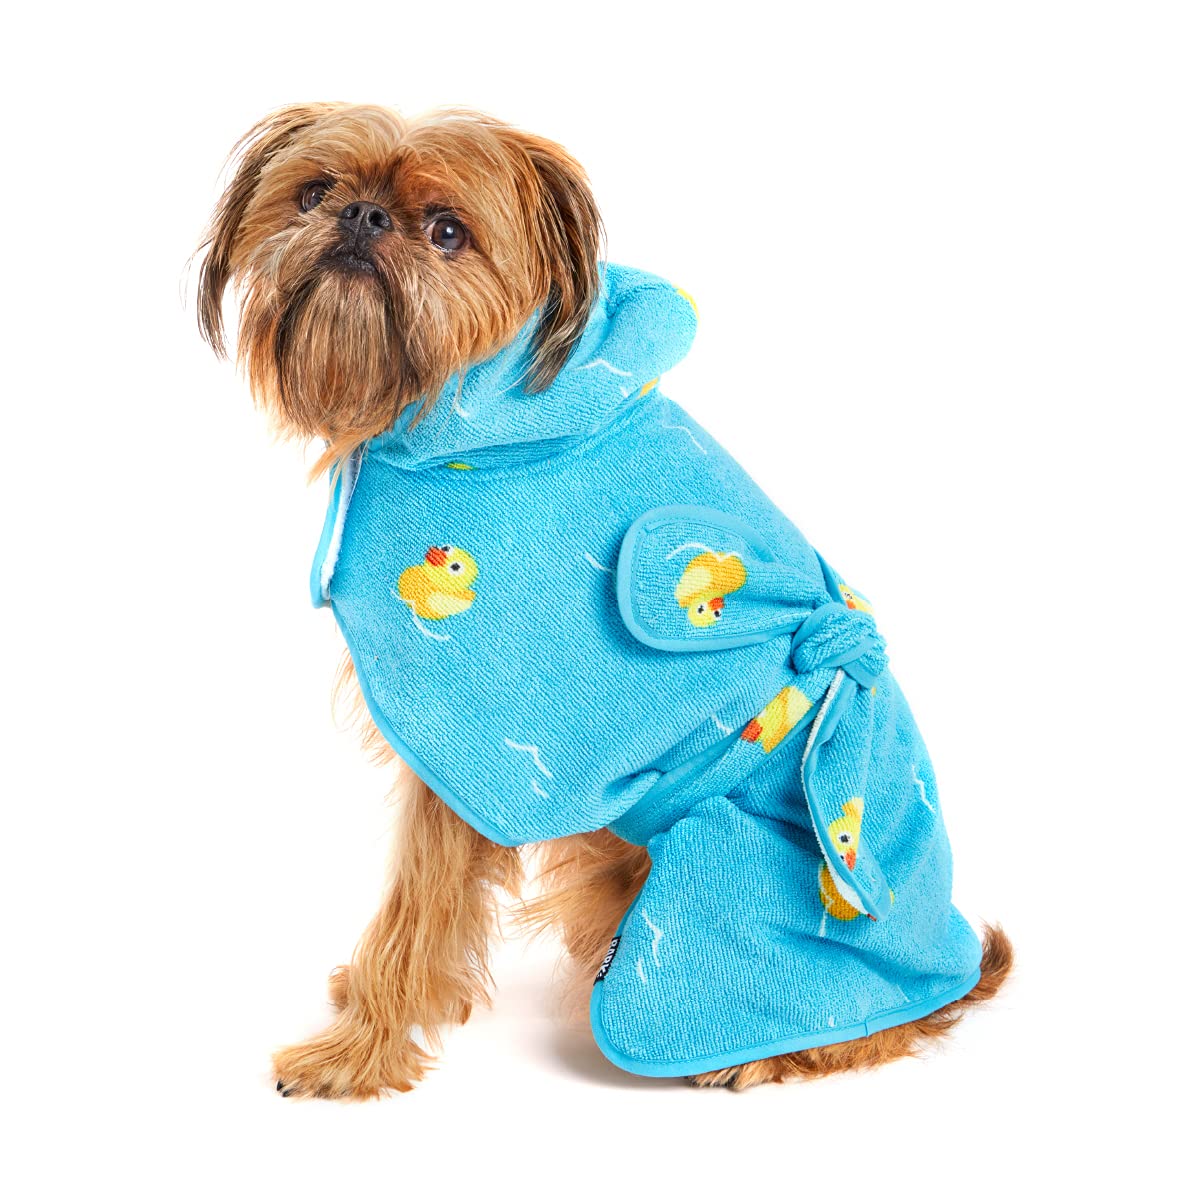 BarkBox Dog Bathrobe Towel - Lightweight, Super Cute Fast Drying Bathrobe for Dogs - Ducky (Small)